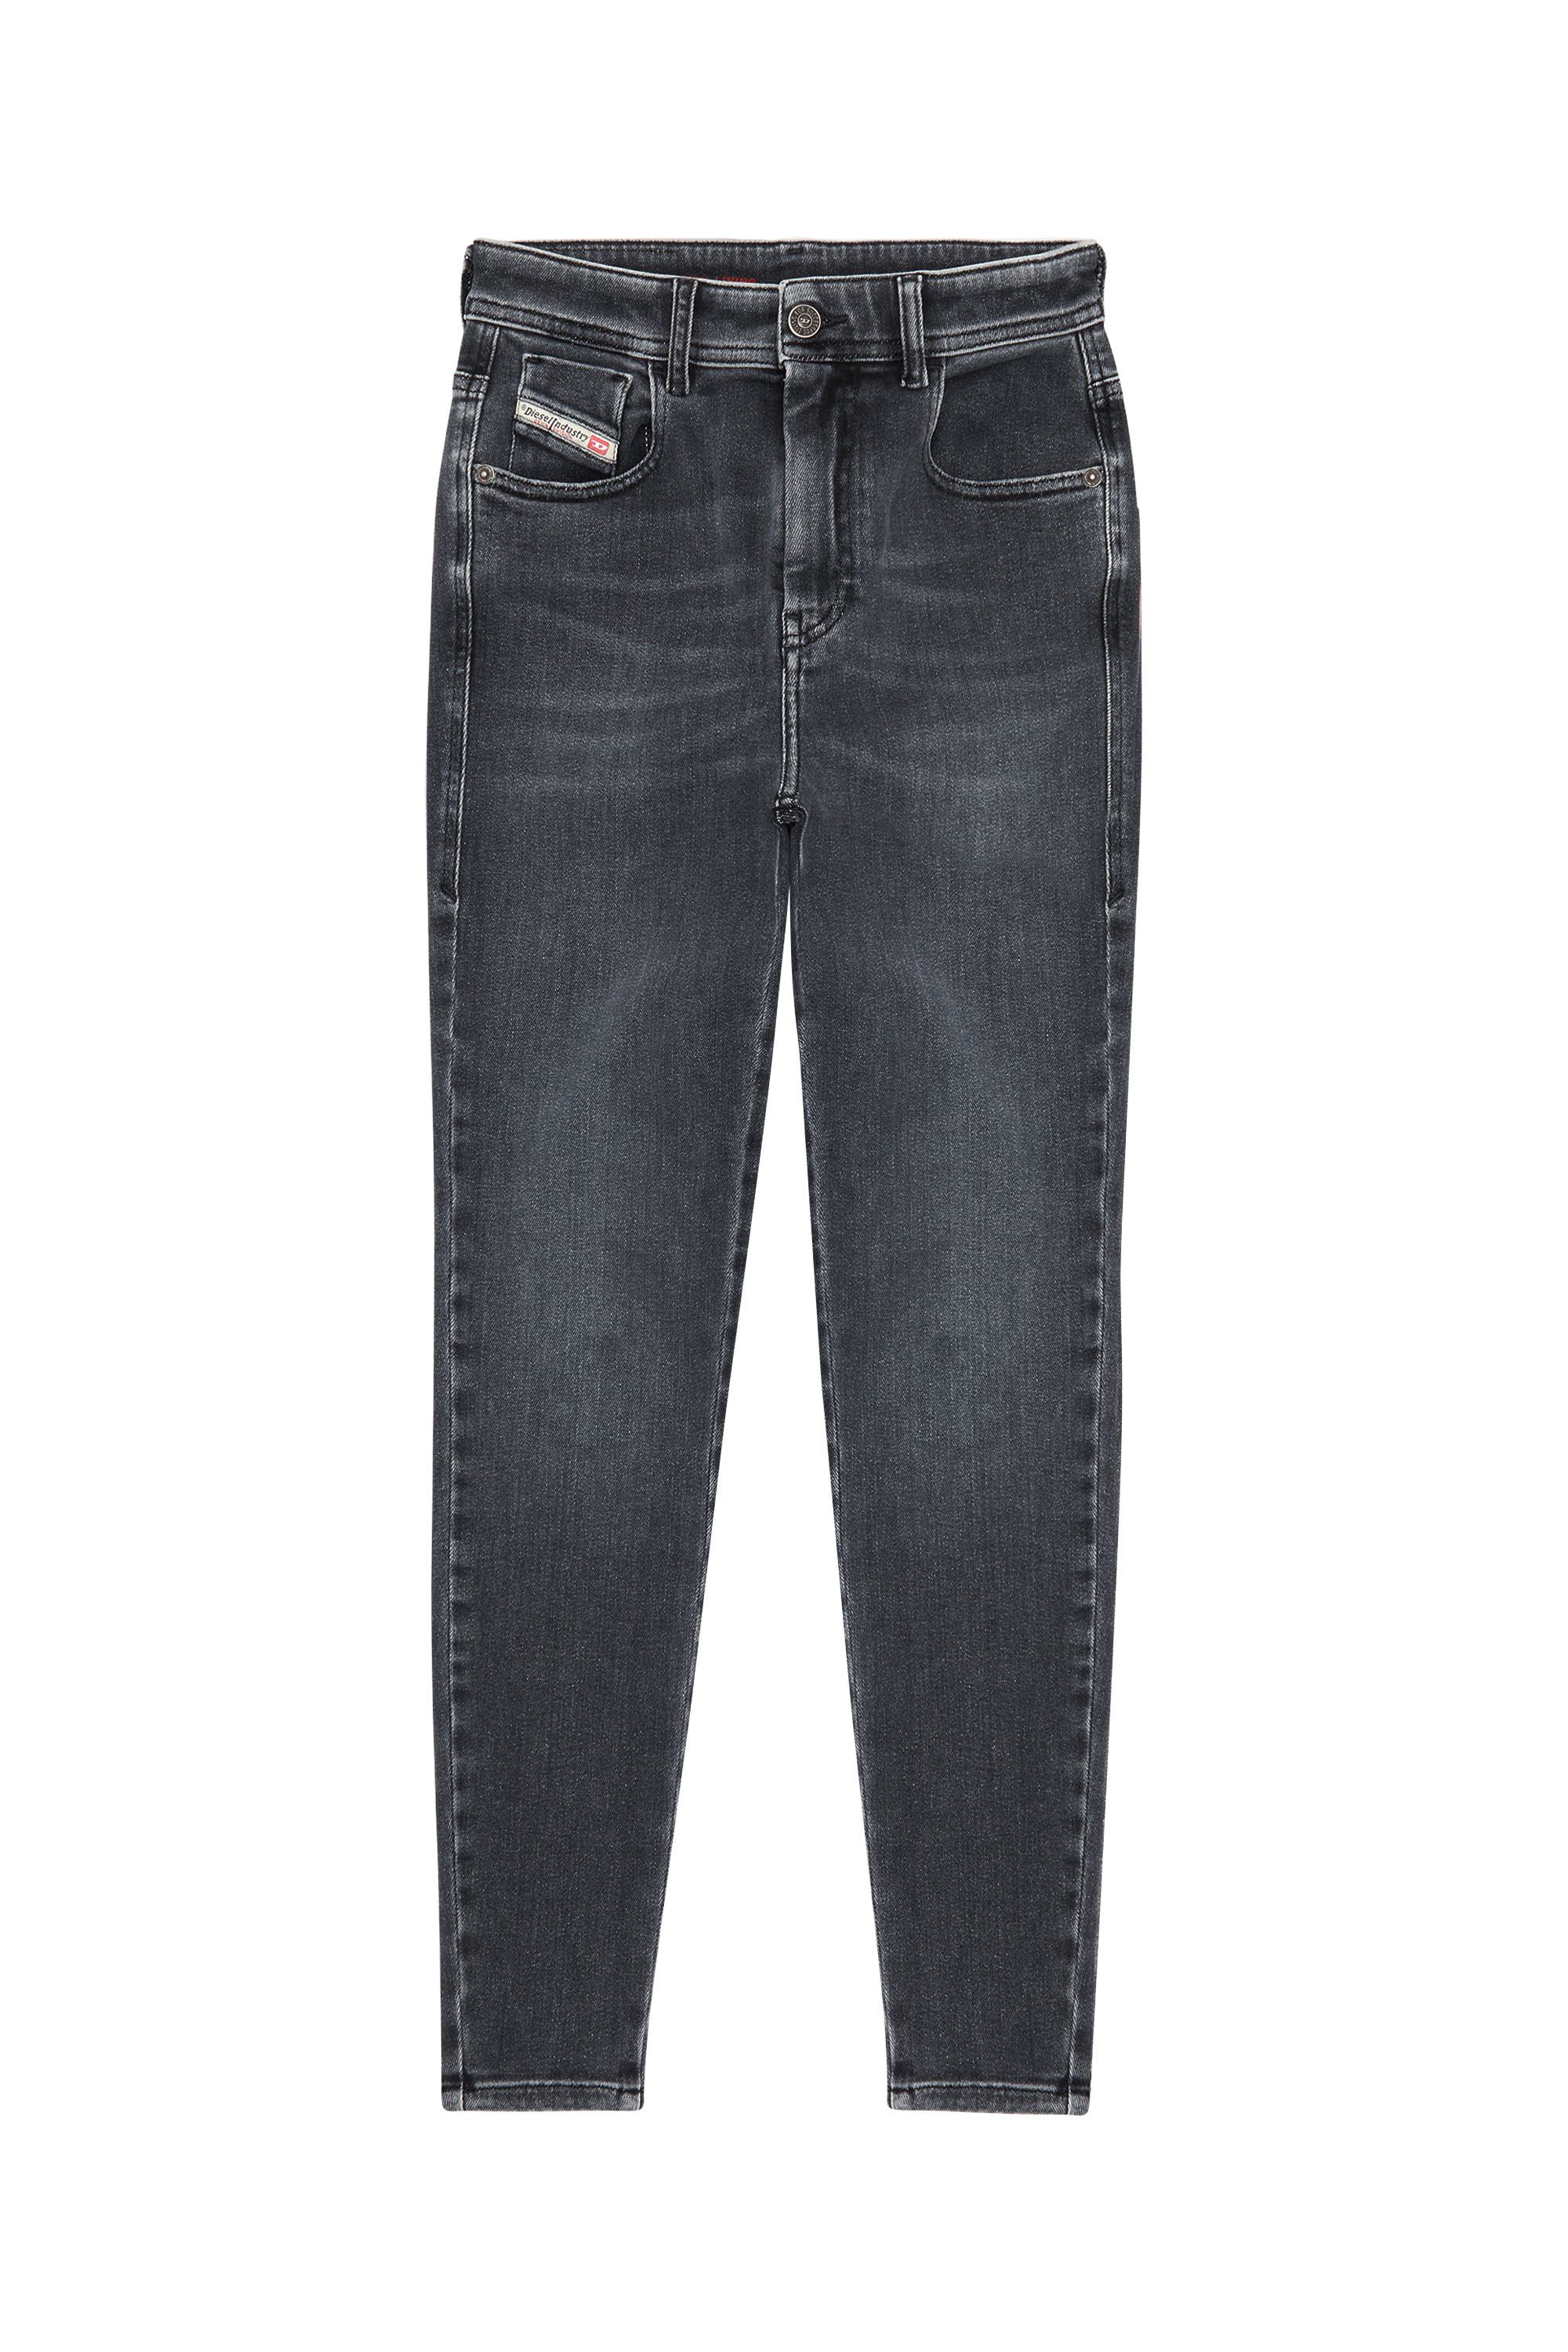 Super skinny Jeans 1984 Slandy-High 09D61, Black/Dark grey - Jeans